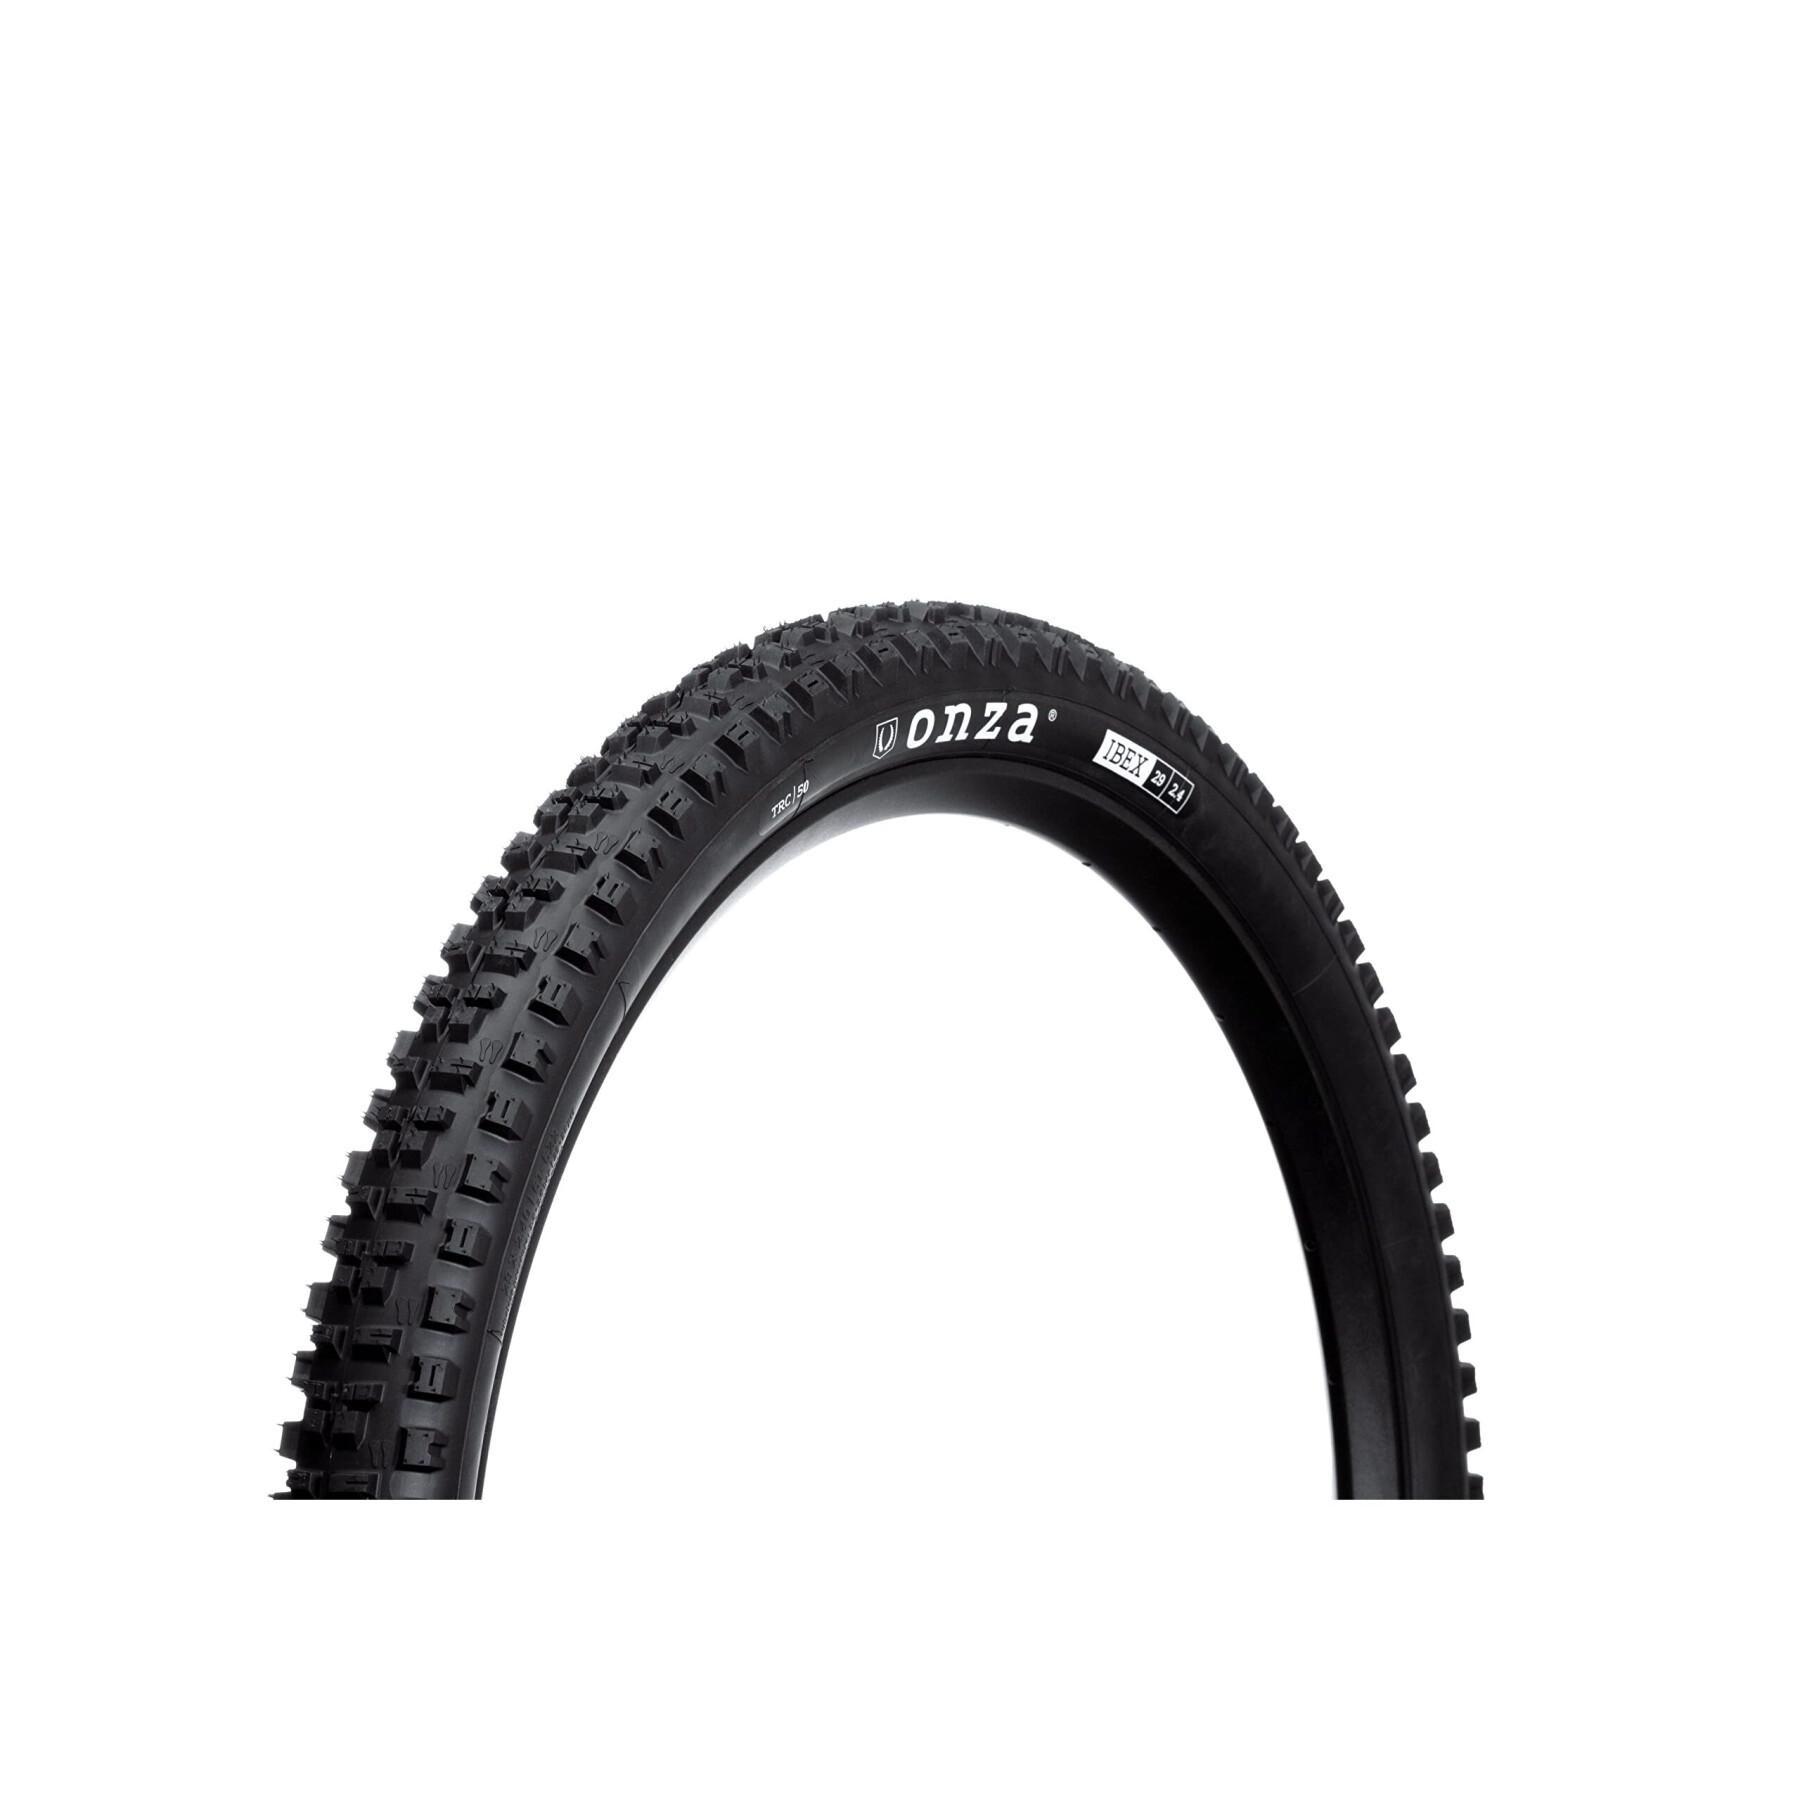 Neumáticos Onza Ibex TRC 60 TPI gomme ,50a | 45a, 61-622, 880 g